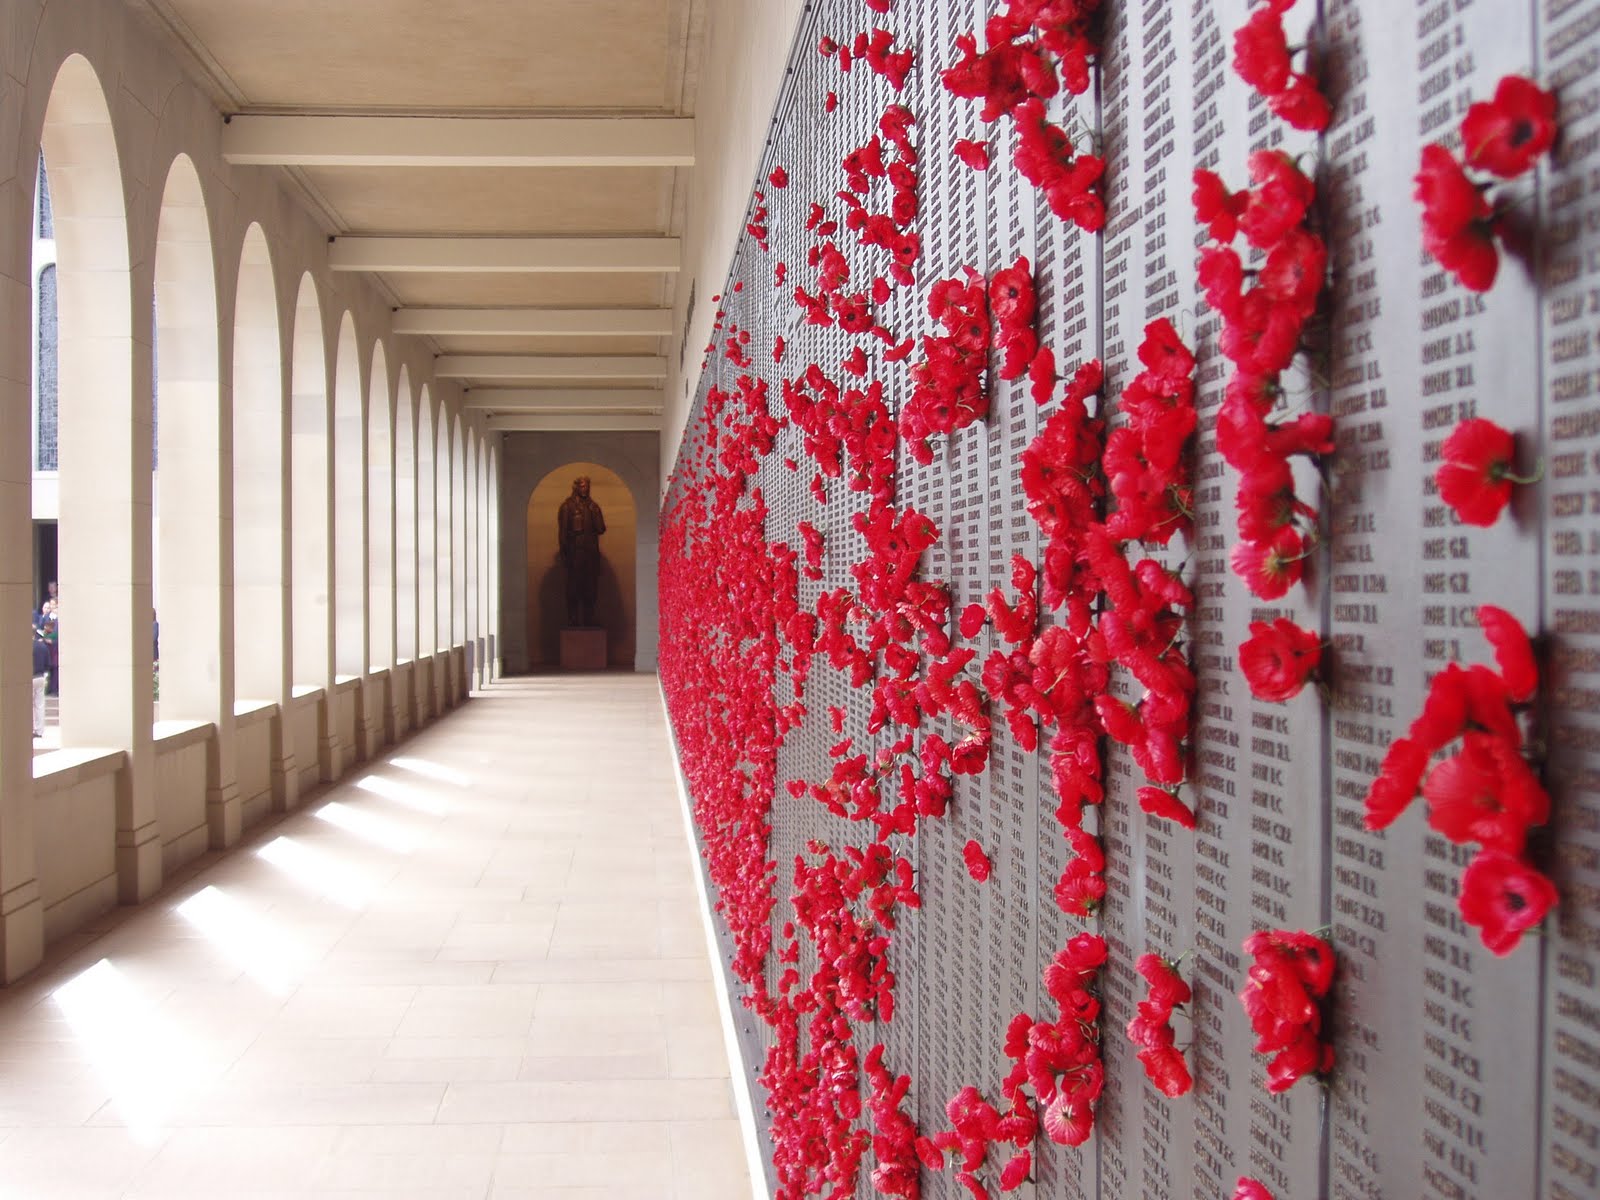 Flanders Poppy as war memorial